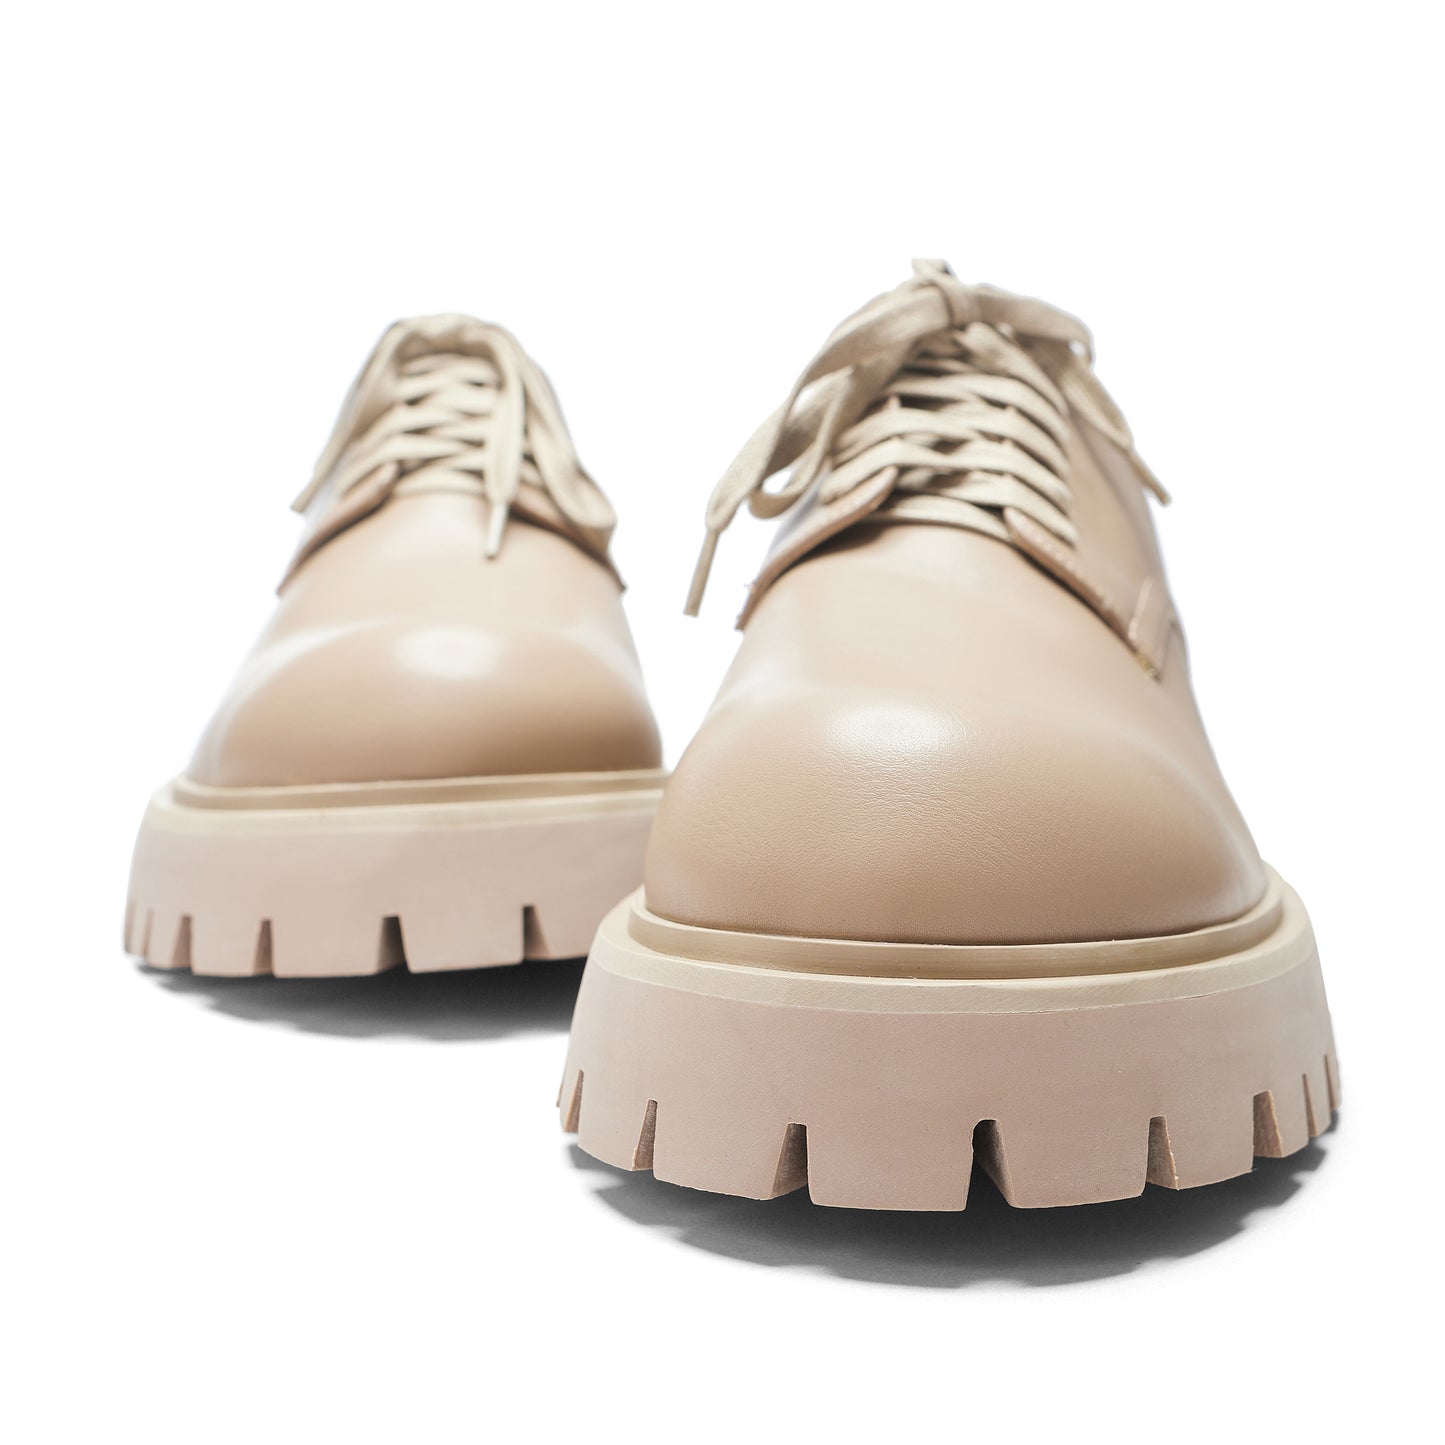 Avian Men's Lace Up Shoes-Sand - Shoes - KOI Footwear - Beige - Front View